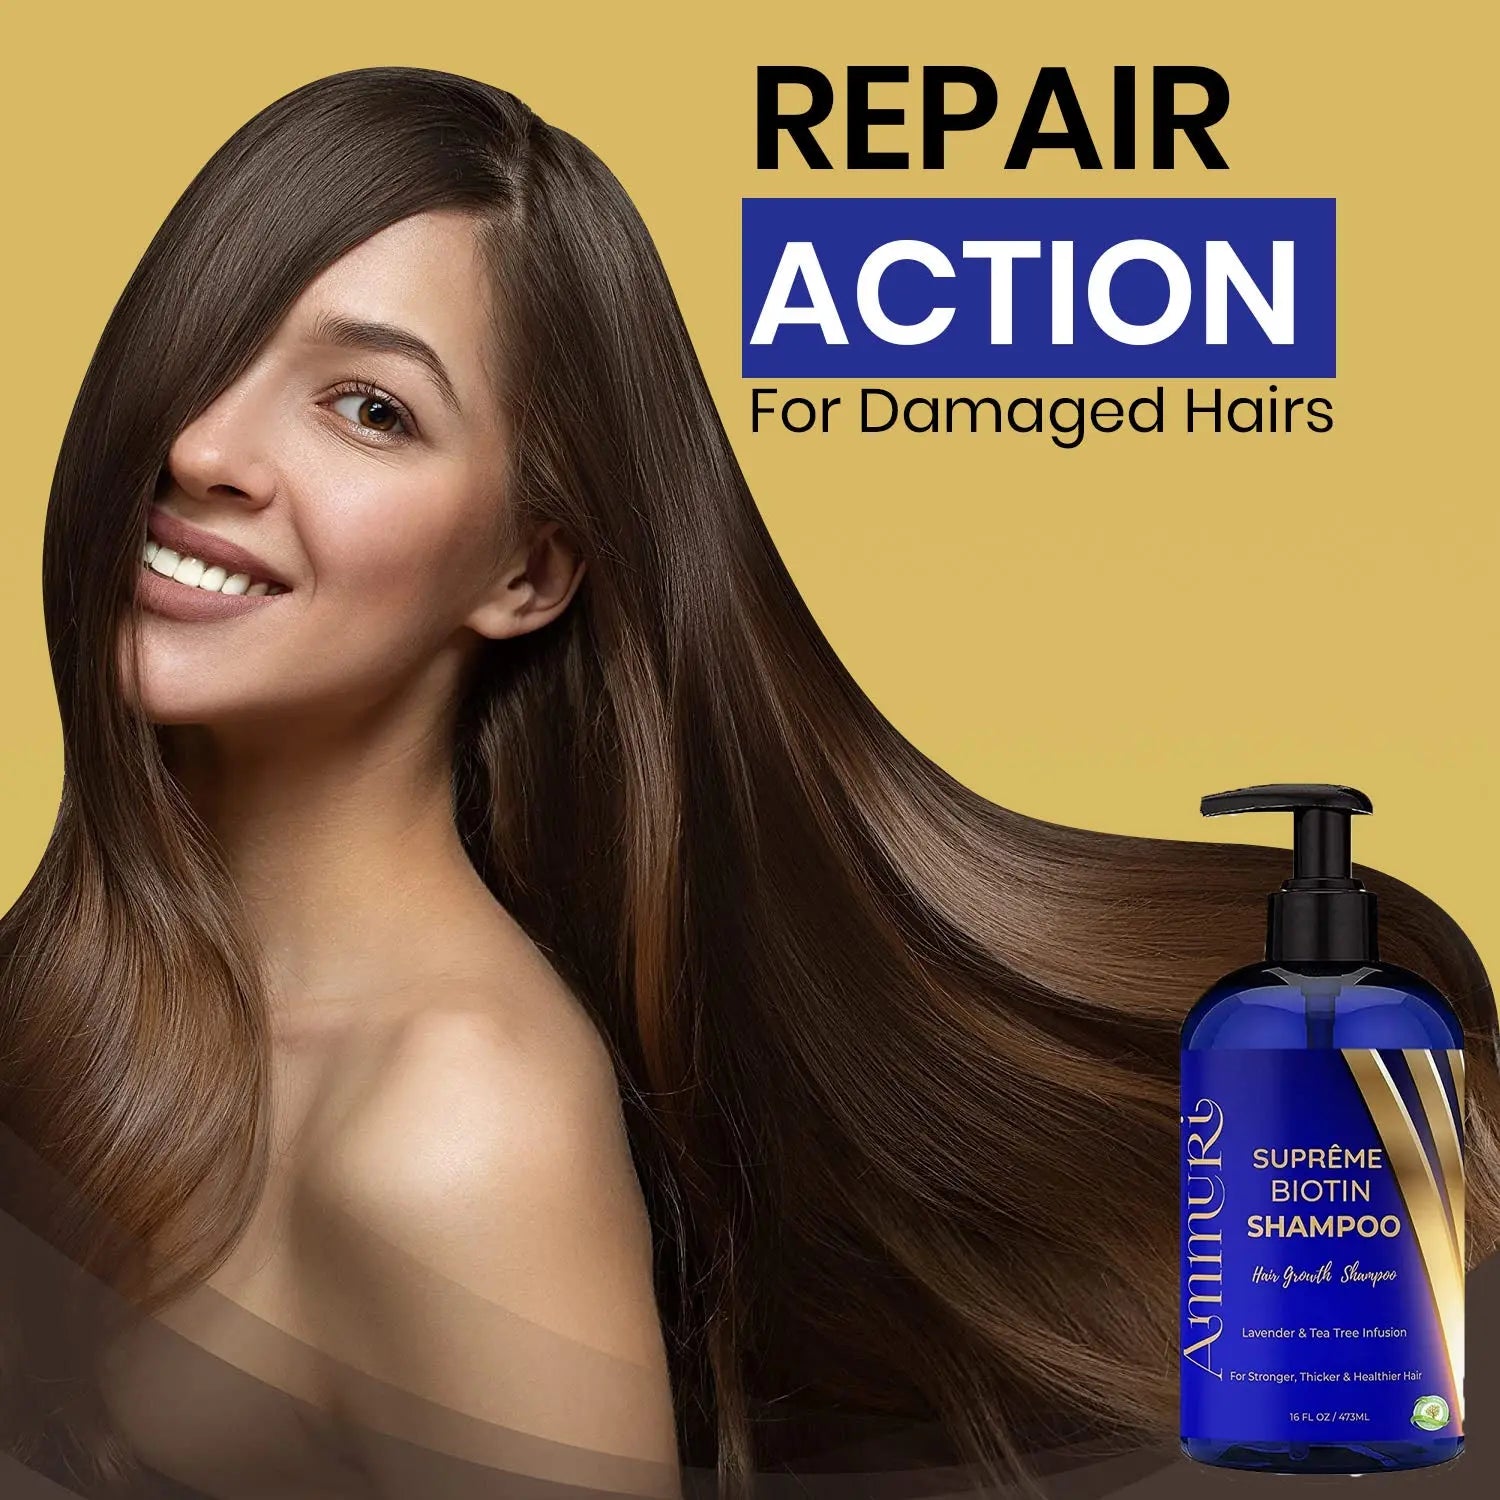 Revitalize Your Hair with Ammuri: Biotin, Caffeine, Argan Oil - Ultimate Solution for Hair Loss & Dandruff Shampoo - Ammuri Skincare